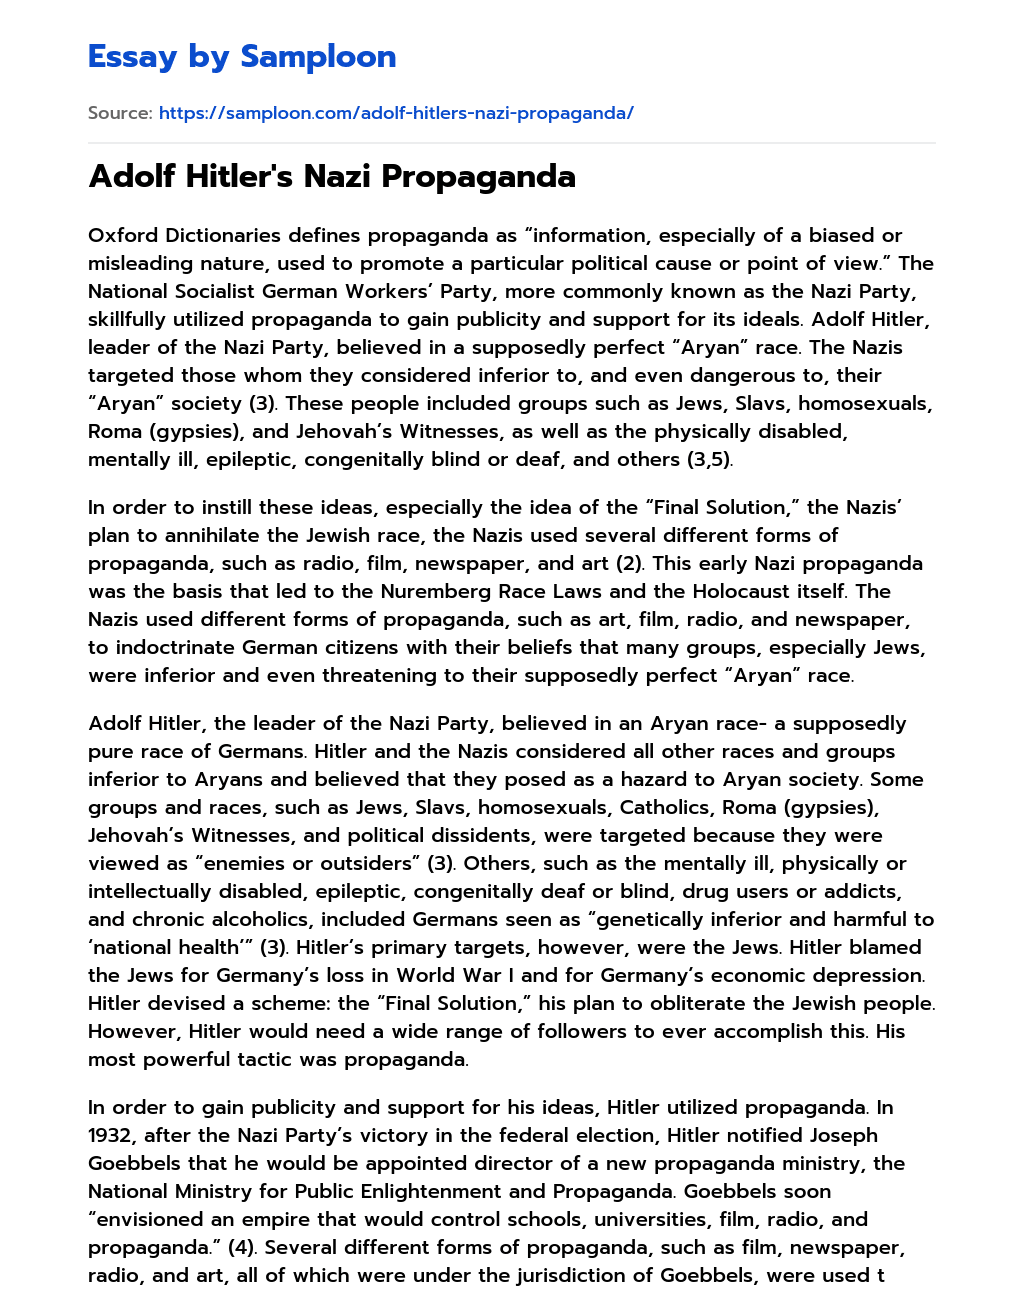 Adolf Hitler’s Nazi Propaganda essay